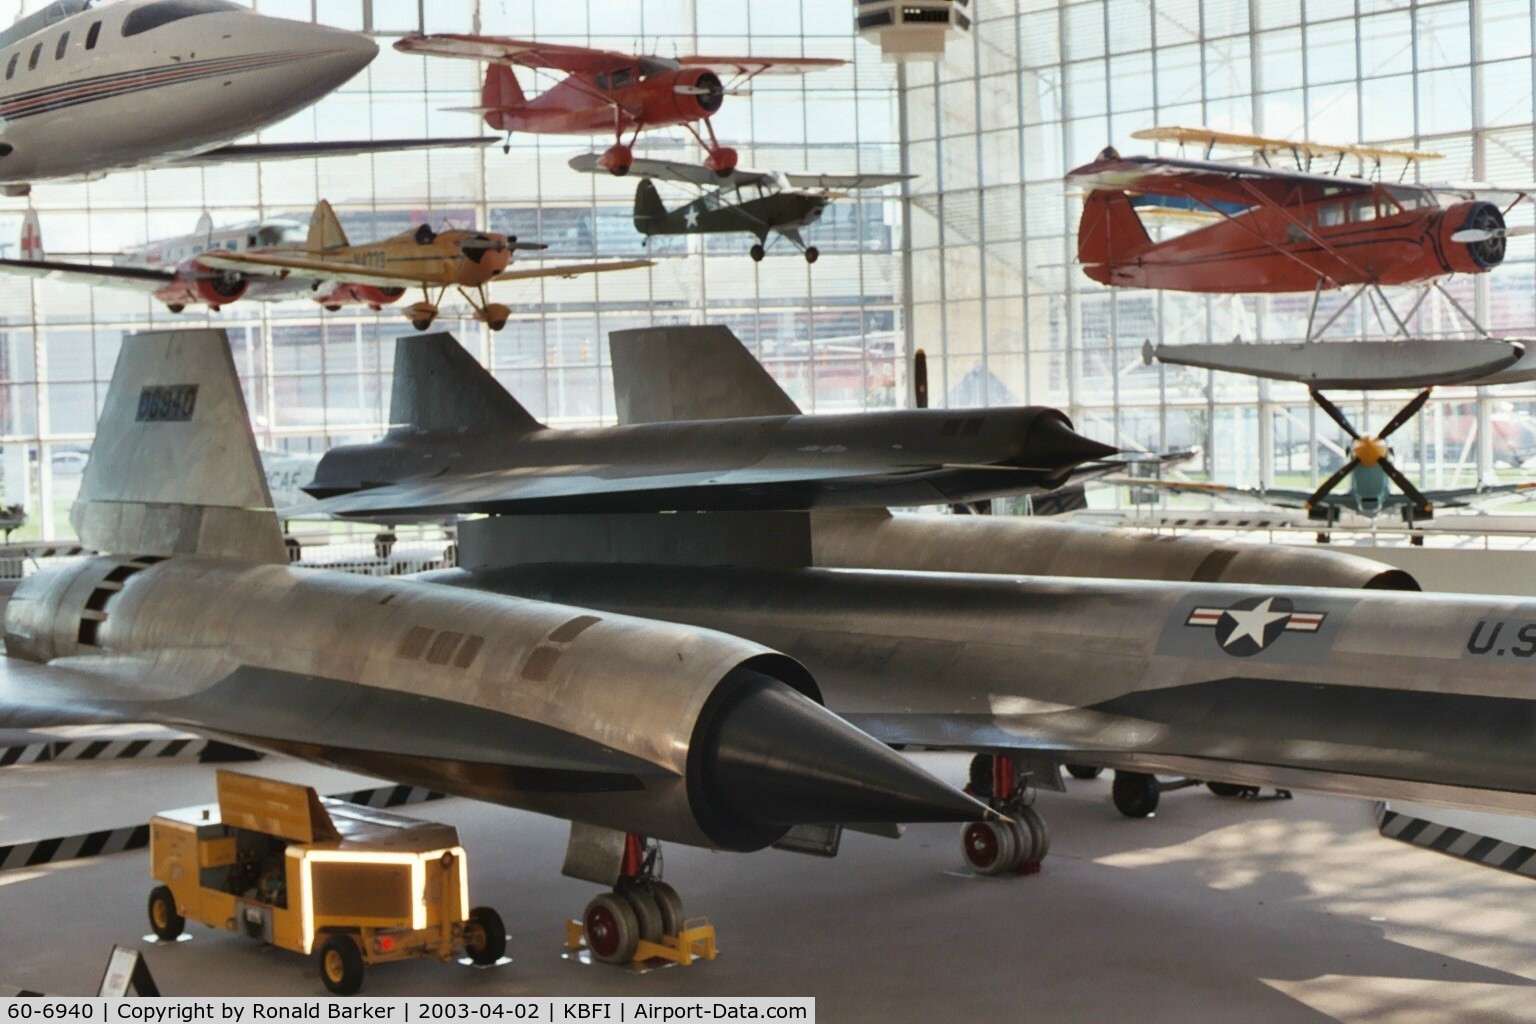 60-6940, 1962 Lockheed A-11 Blackbird C/N 134, M-21 with D-21 Boeing Museum of Flight